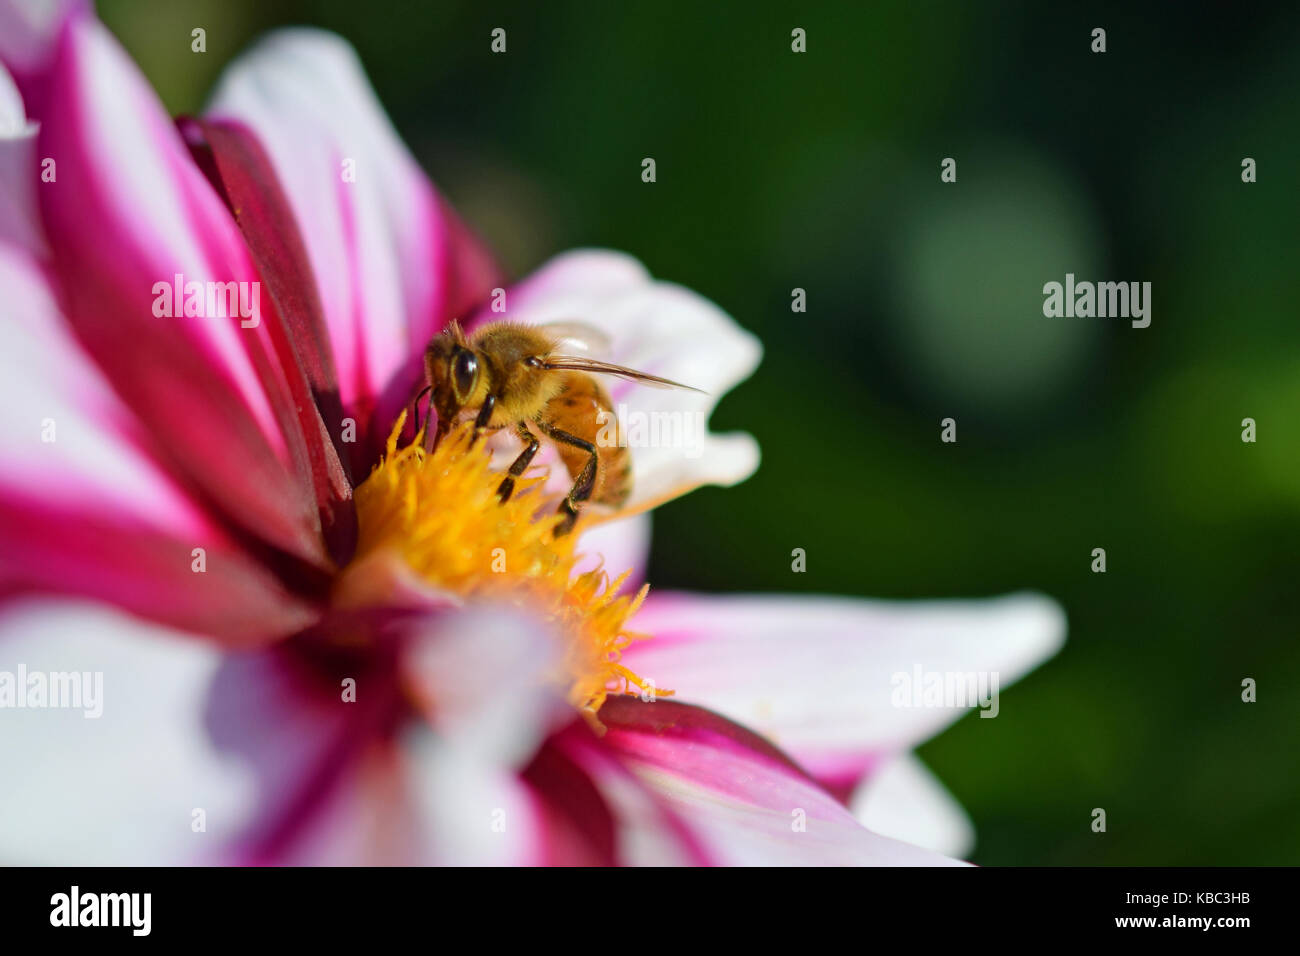 Honey bee (Apis mellifera) on white red dahlia flower. Horizontal image with room for text. Stock Photo